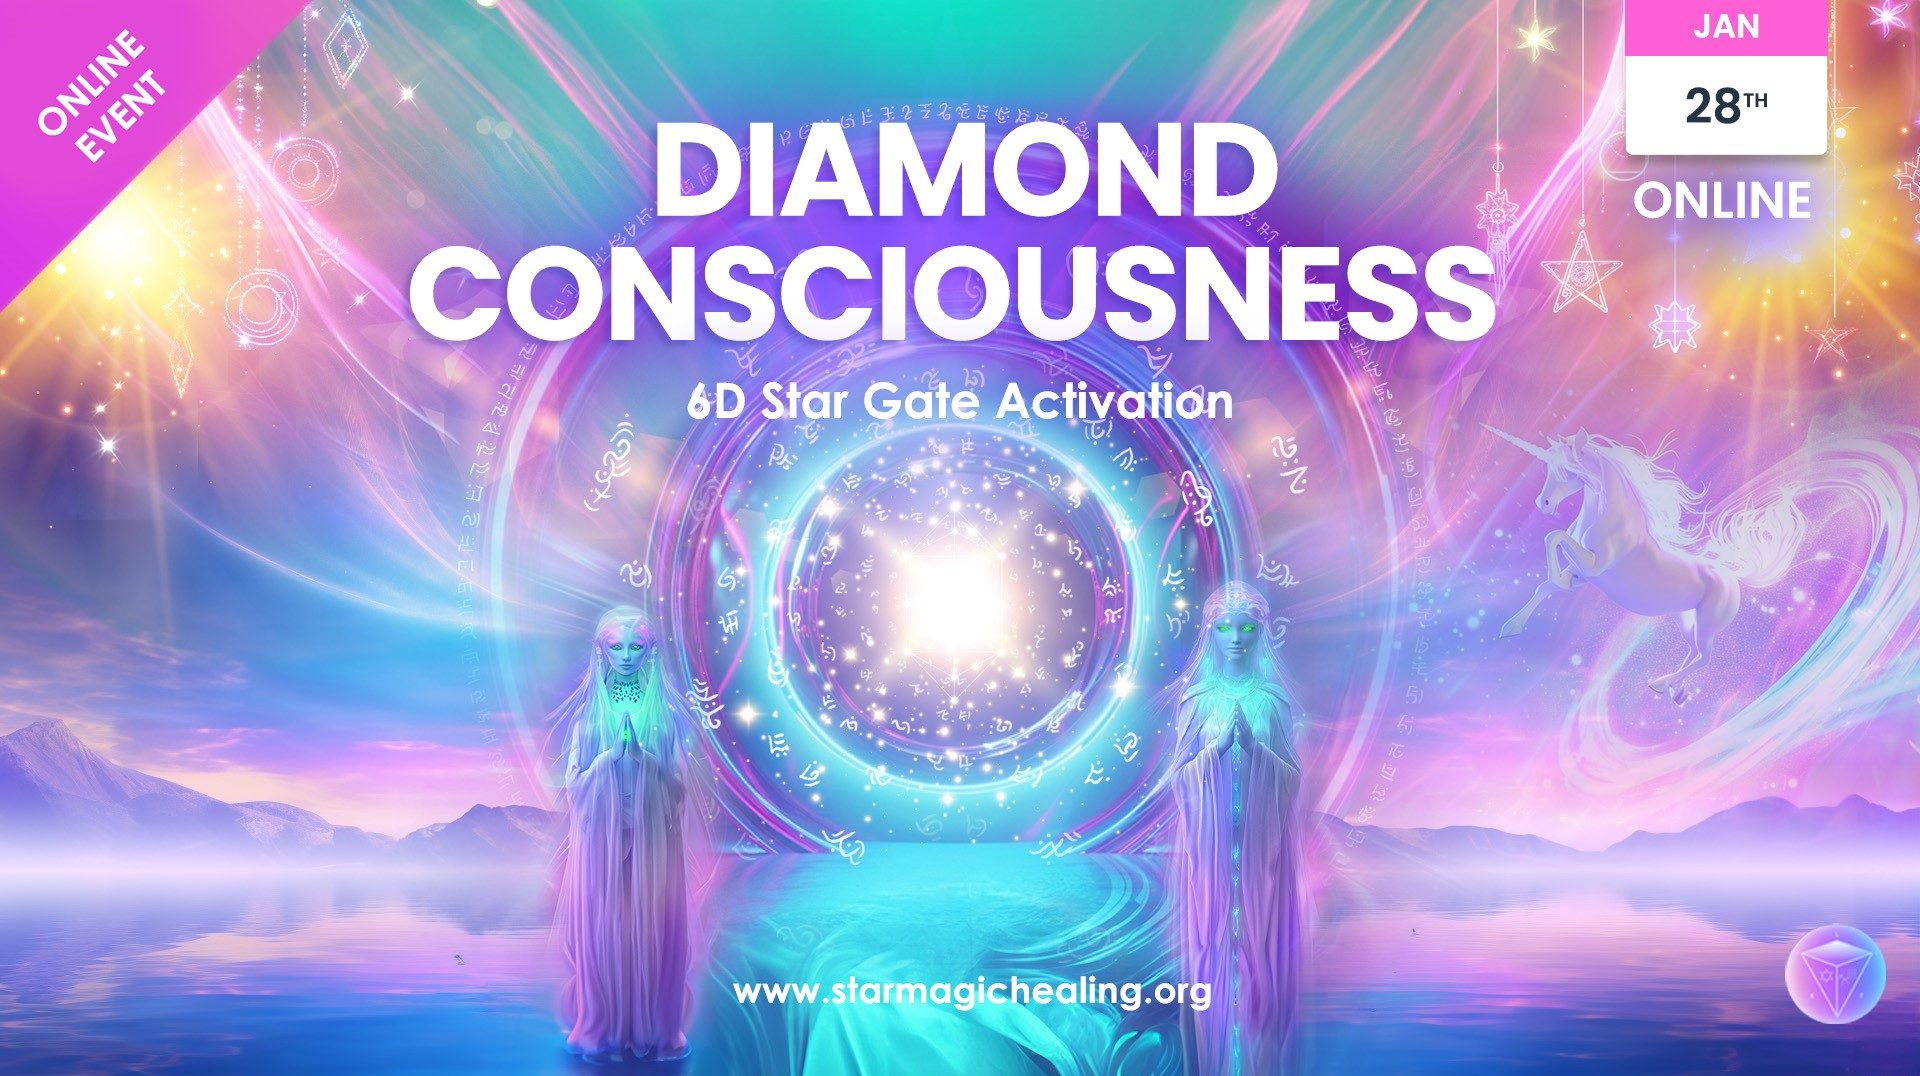 Diamond Consciousness 6D Star Gate Activation